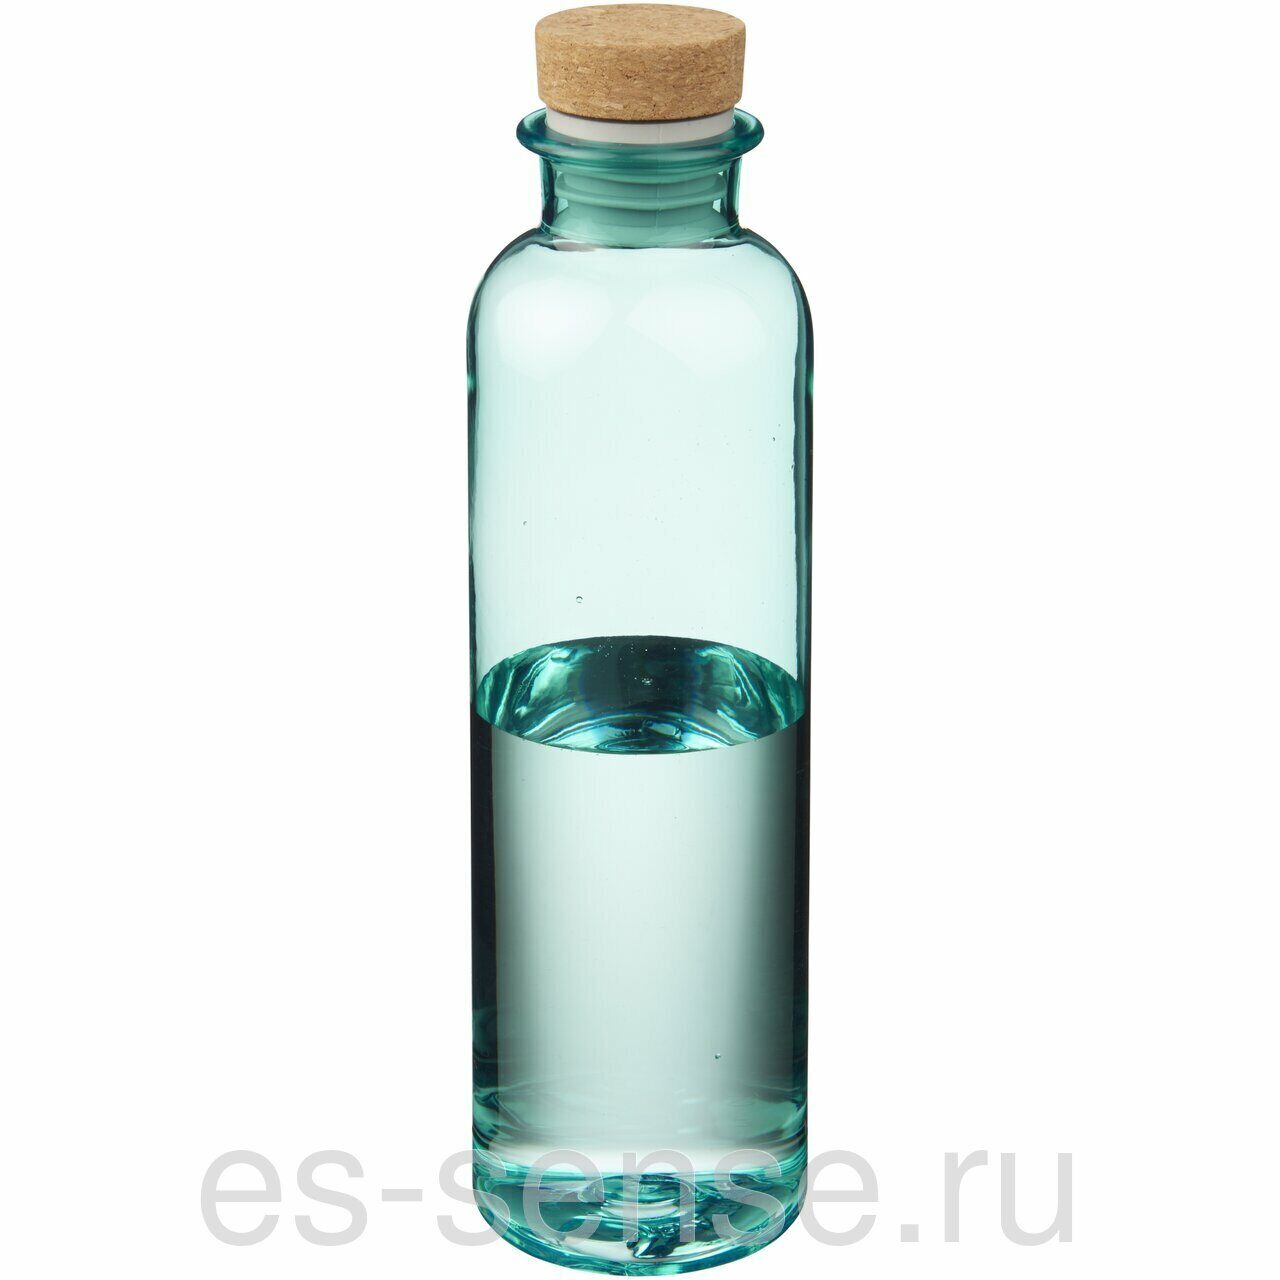 Прозрачные бутылки для воды. Стеклянная бутылка для воды. Стеклянные бутылки дляьводы. Бутылка с жидкостью. Бутылка для воды прозрачная.